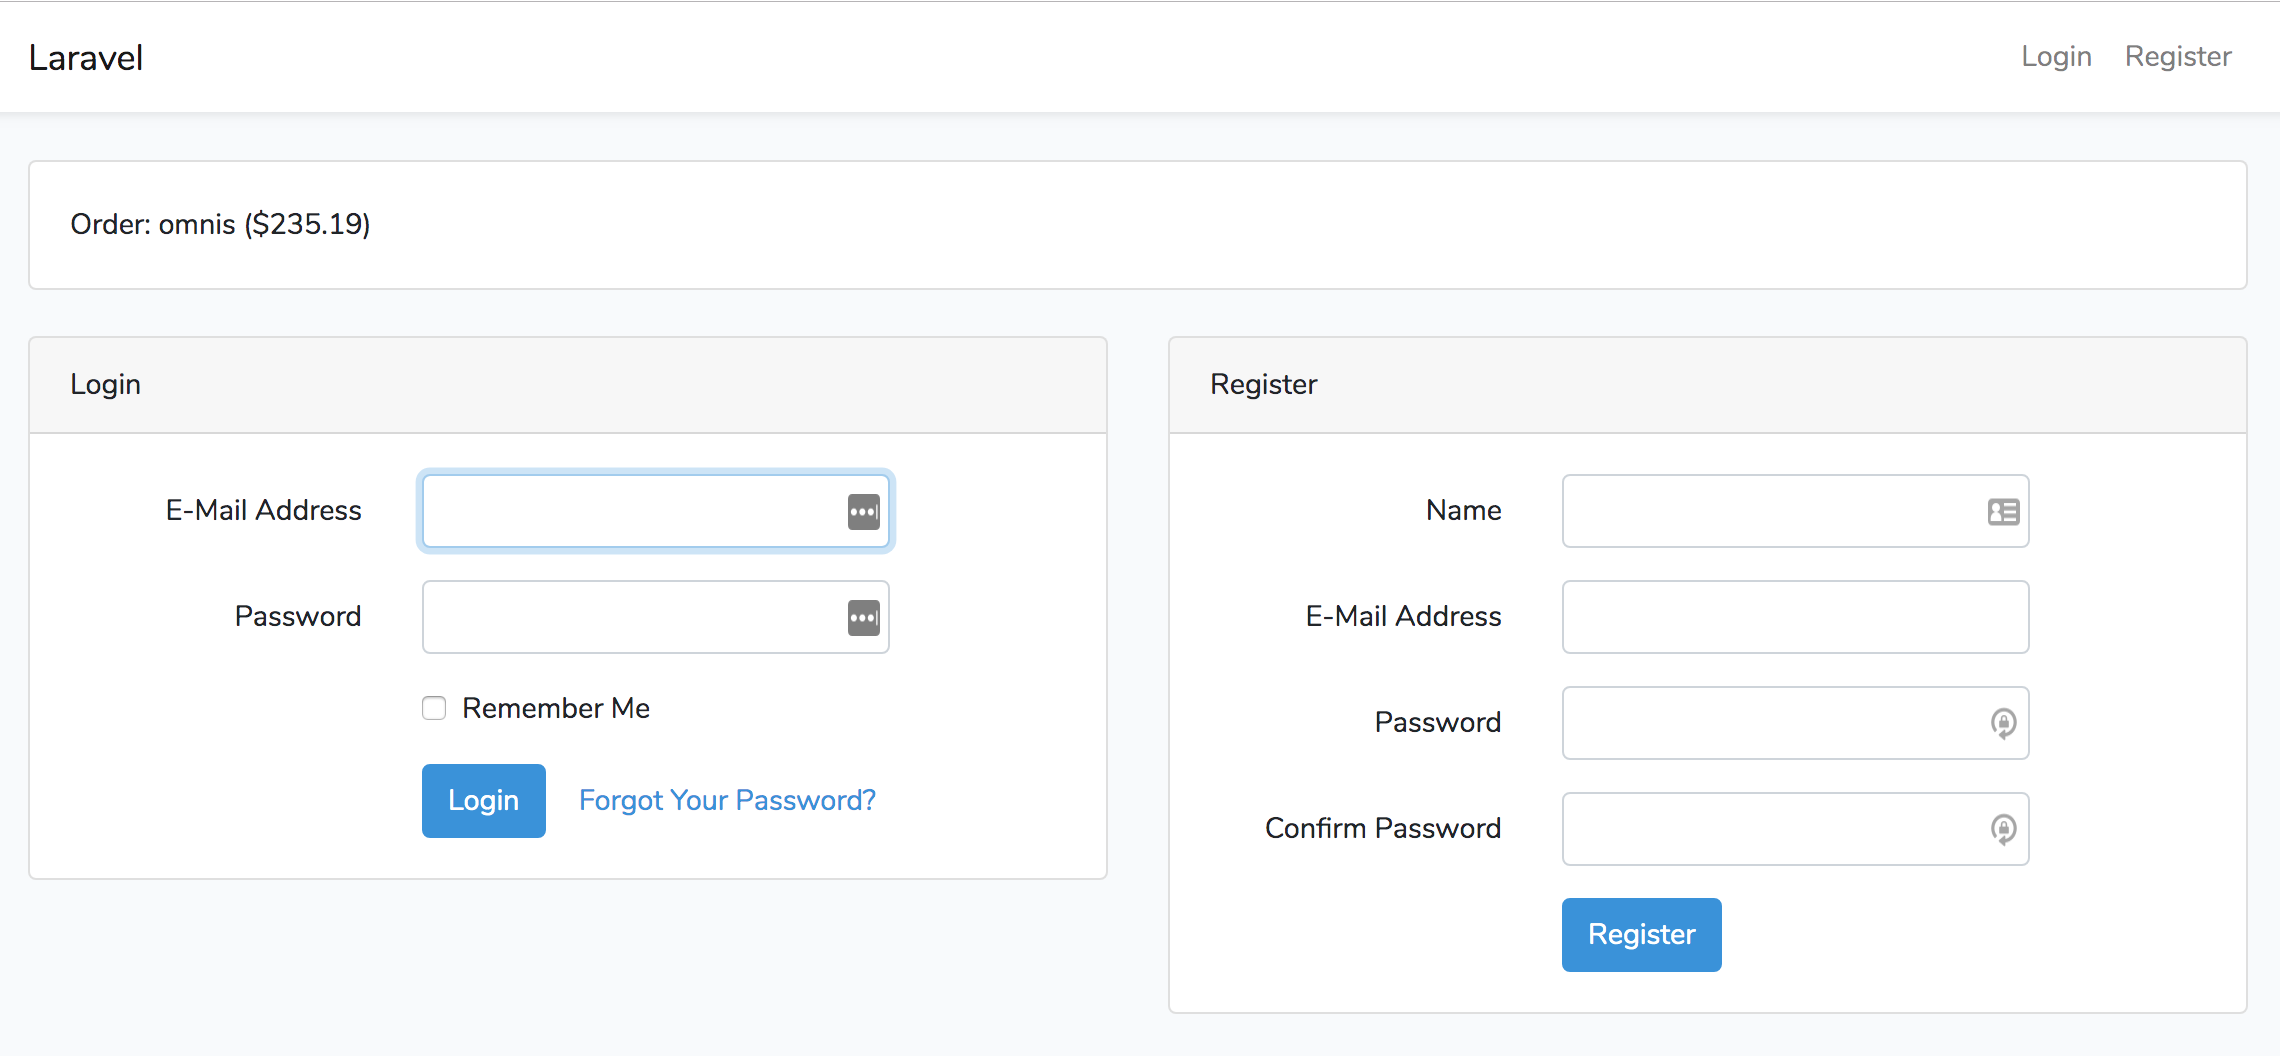 Laravel login. Страница регистрации дизайн. Login register. Laravel форма. Registration address